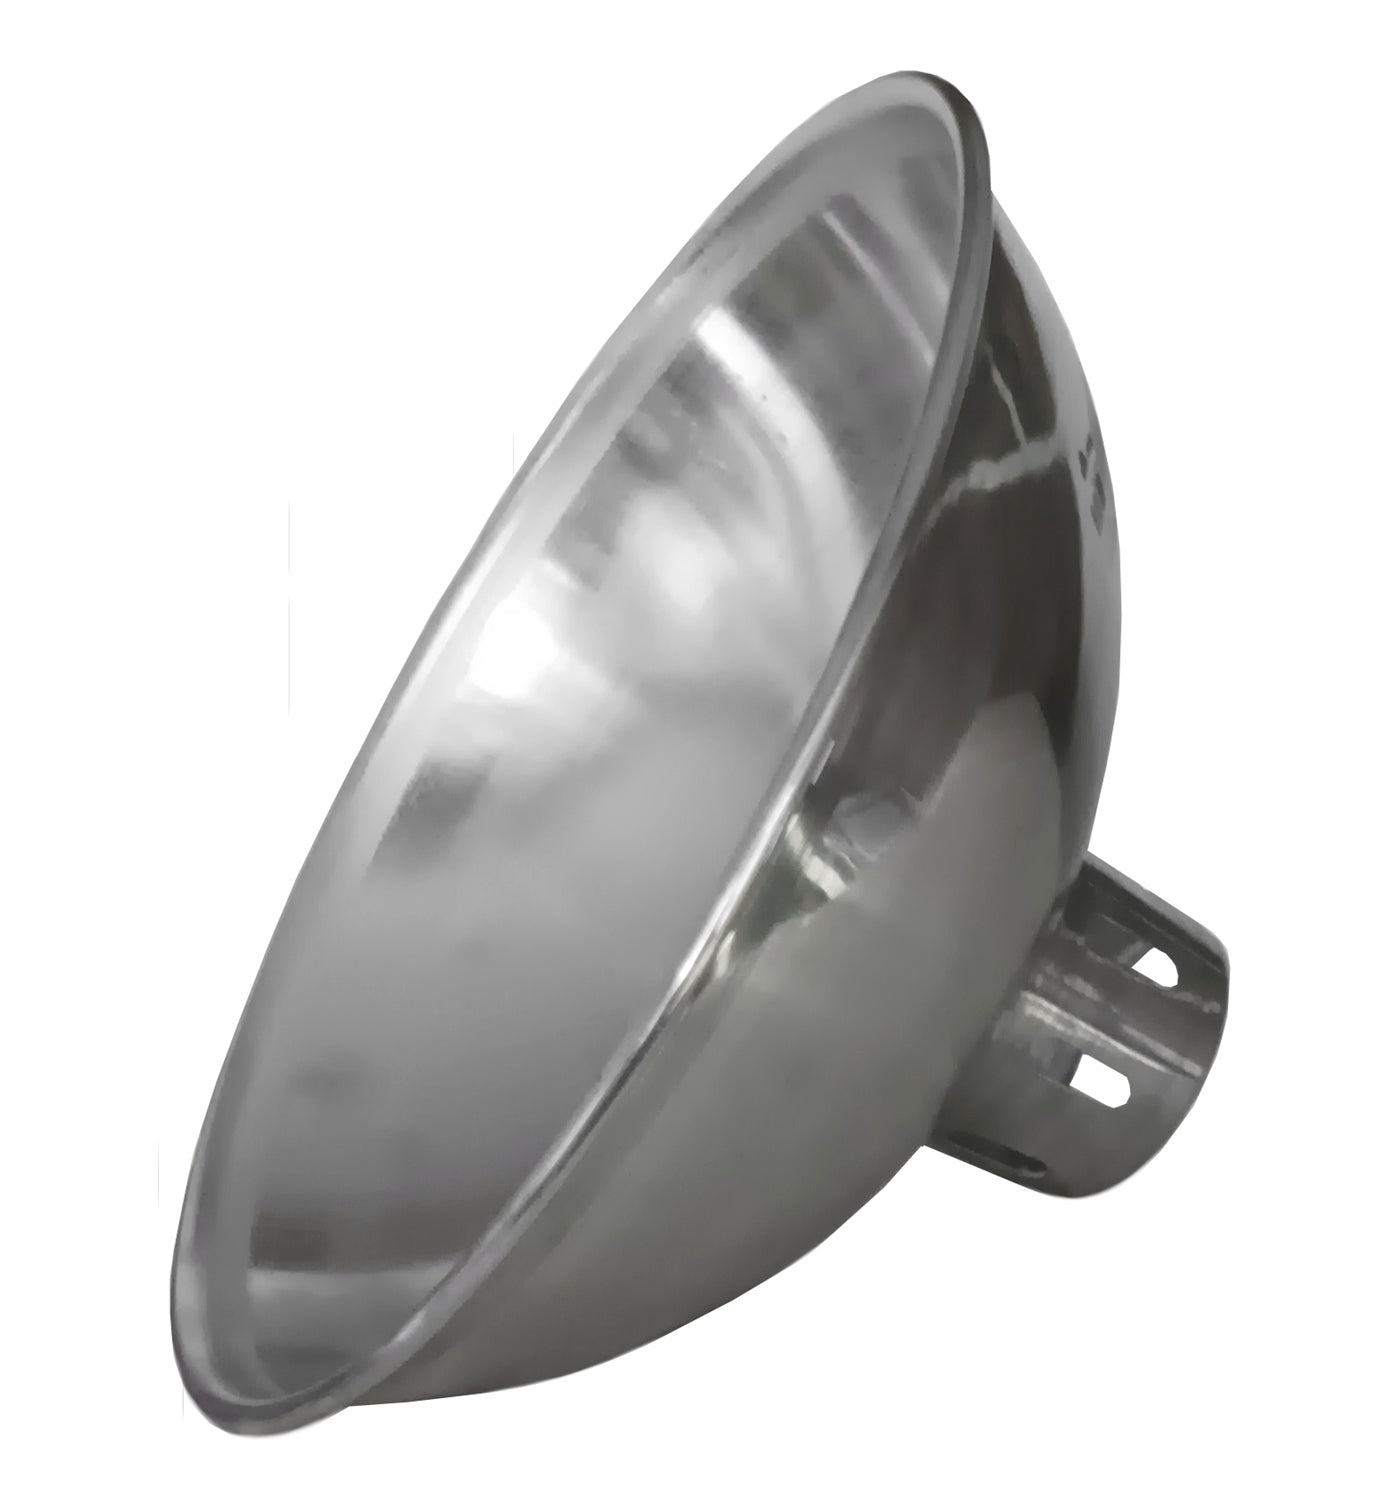 Brooder Heat Lamp Reflector Shade - 300mm Diameter - Buy Online SPR Centre UK